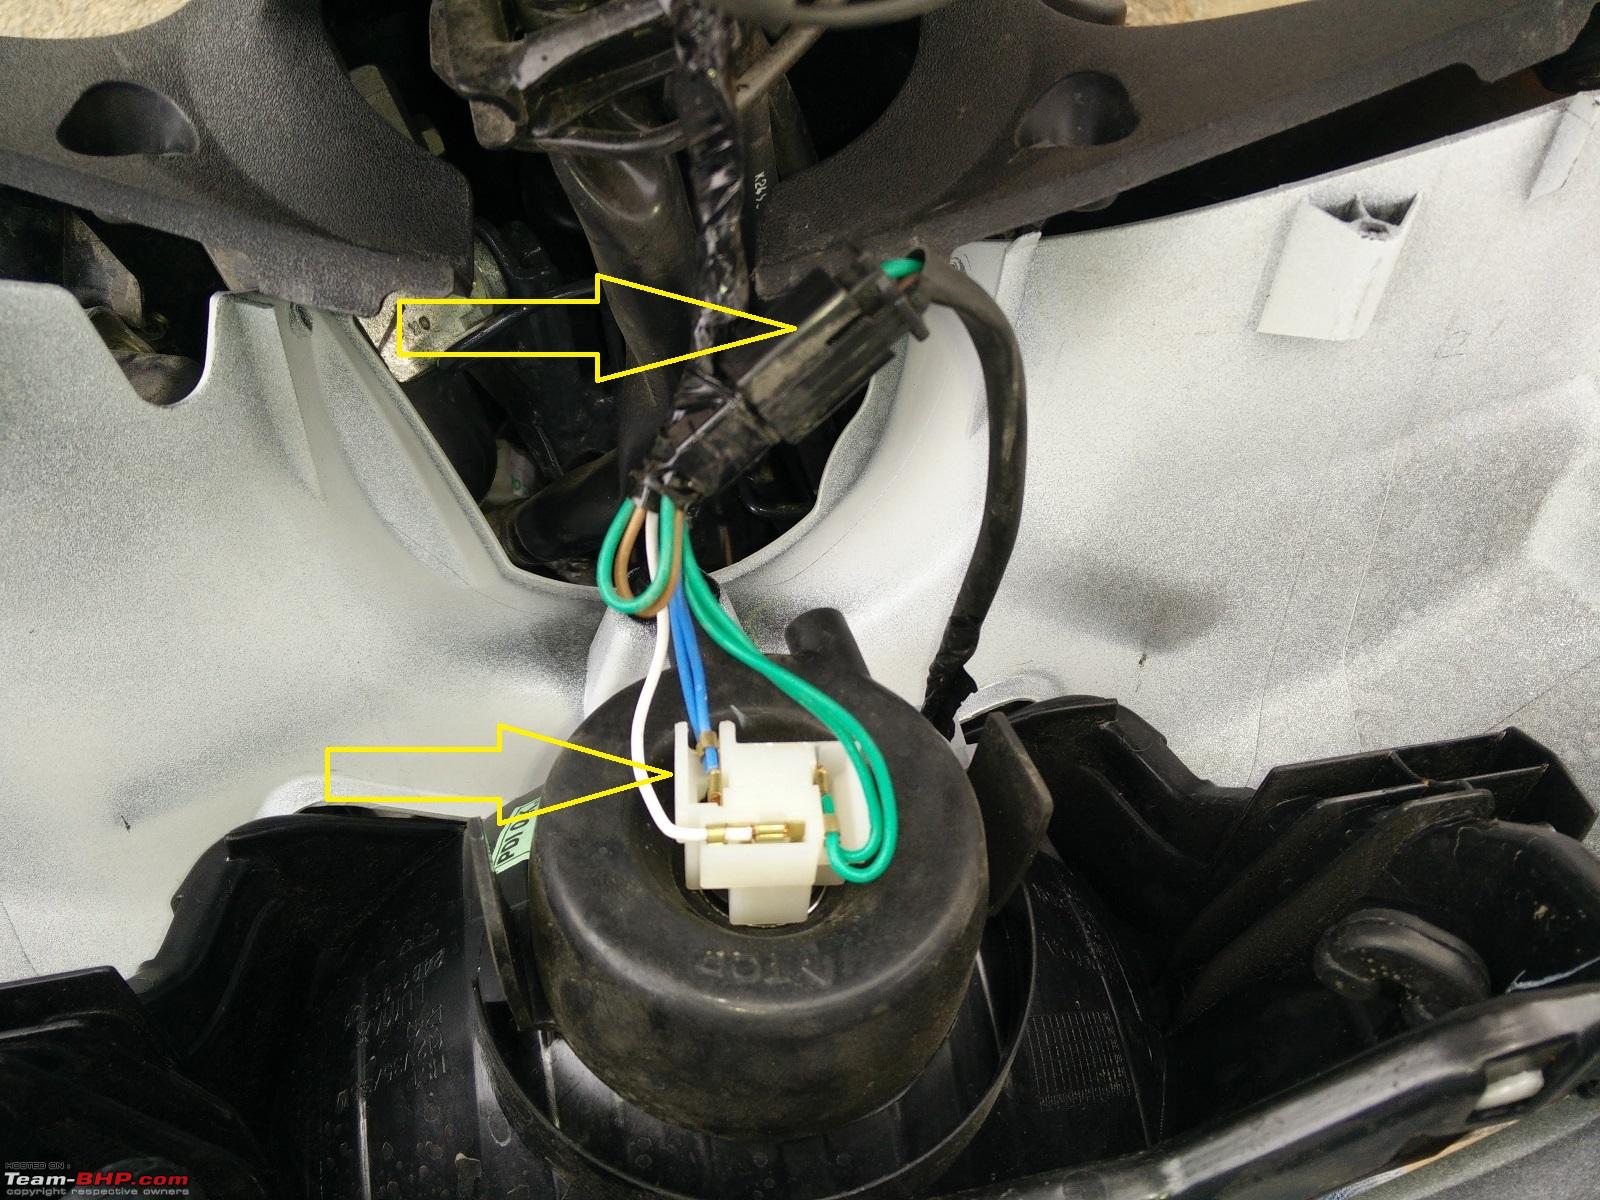 Honda Activa DIY: Headlight upgrade and LEDs for indicators + tail lamps -  Team-BHP Free Wiring Diagrams Team-BHP